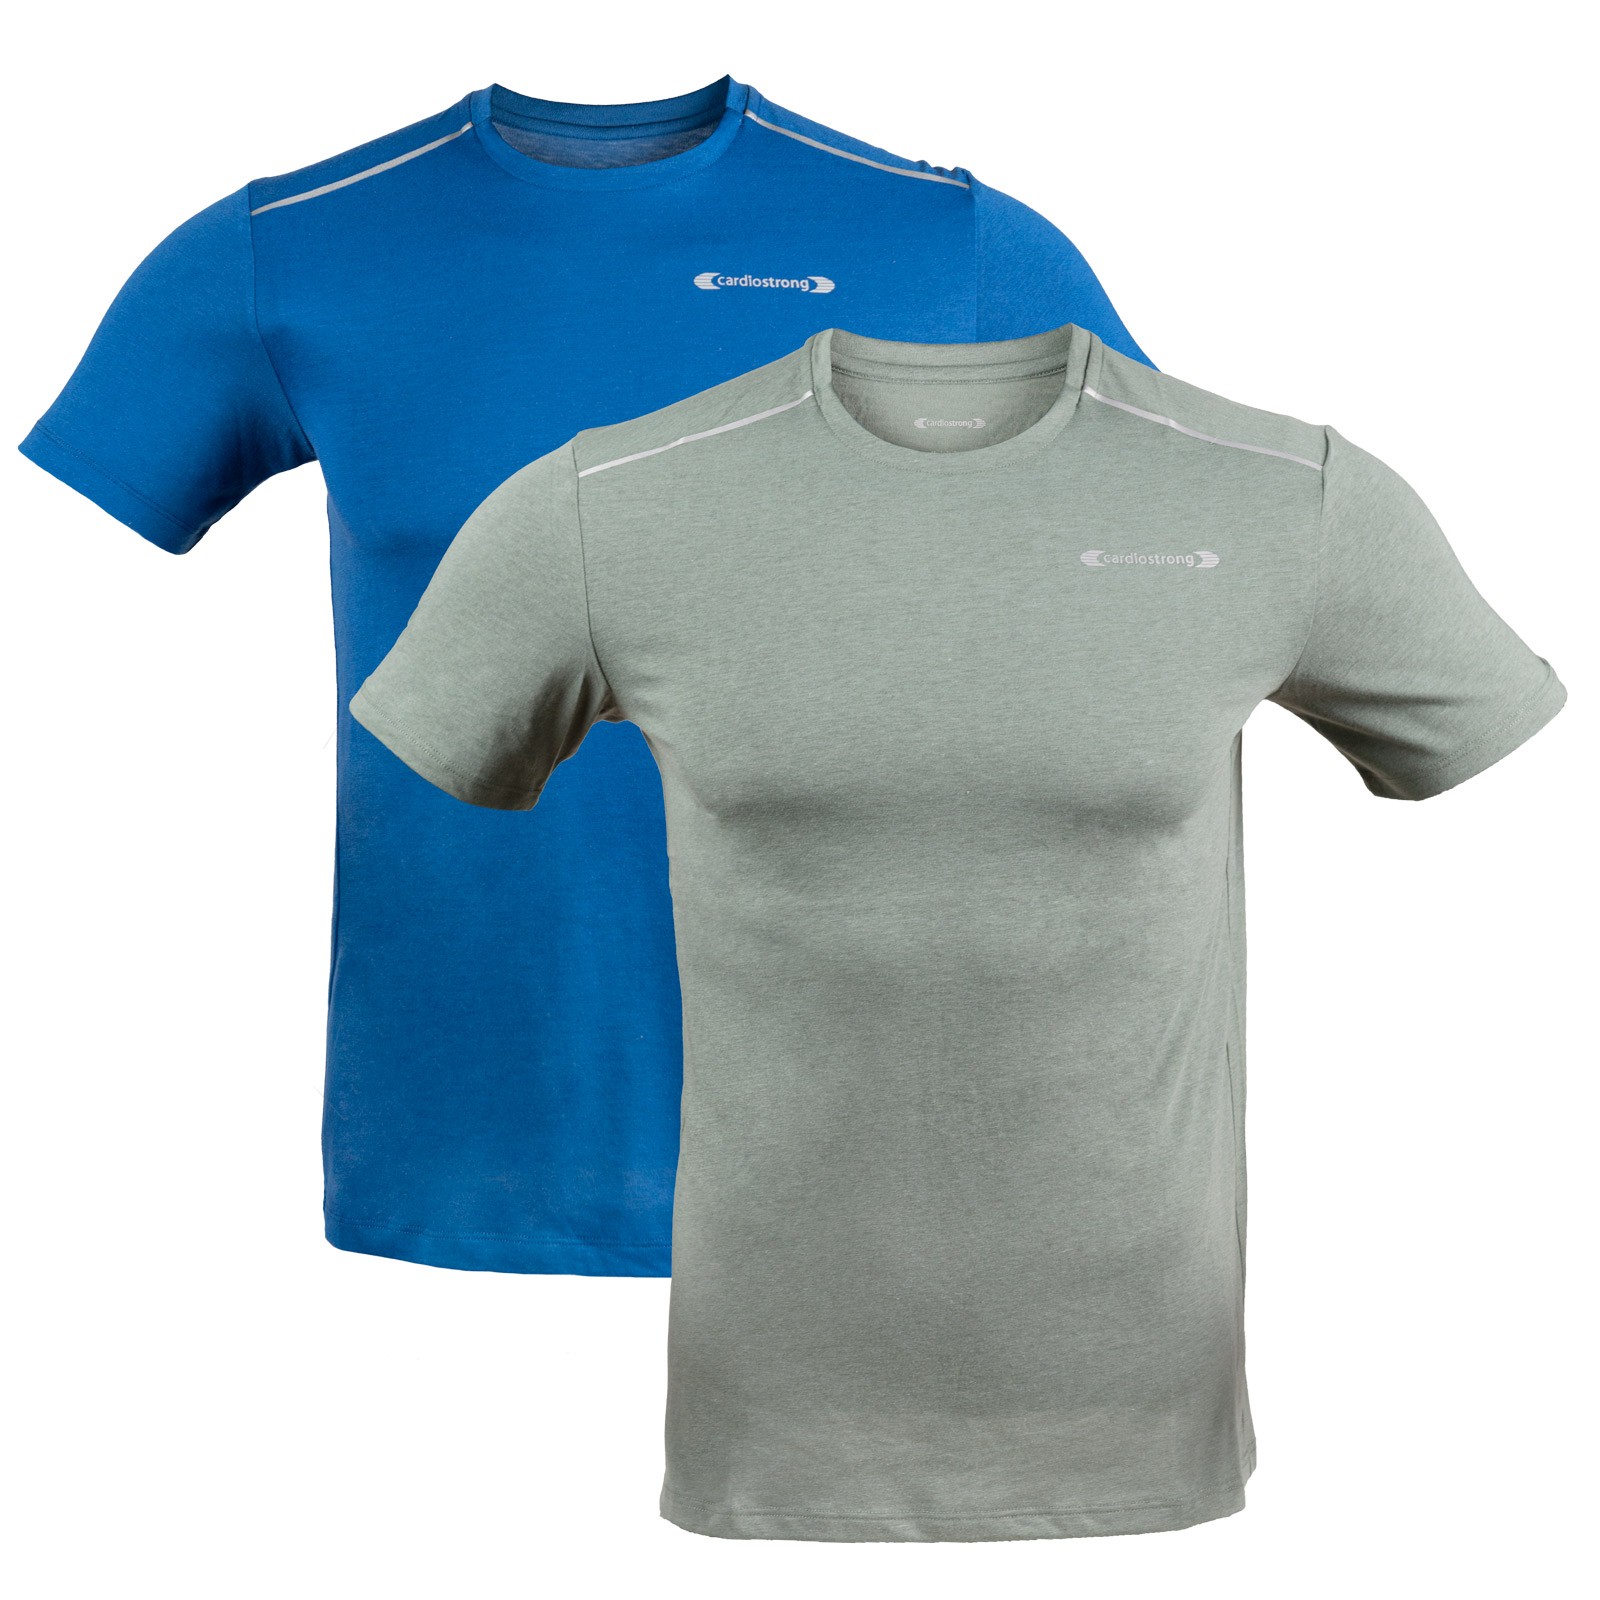 cardiostrong Fitness T-Shirt for men